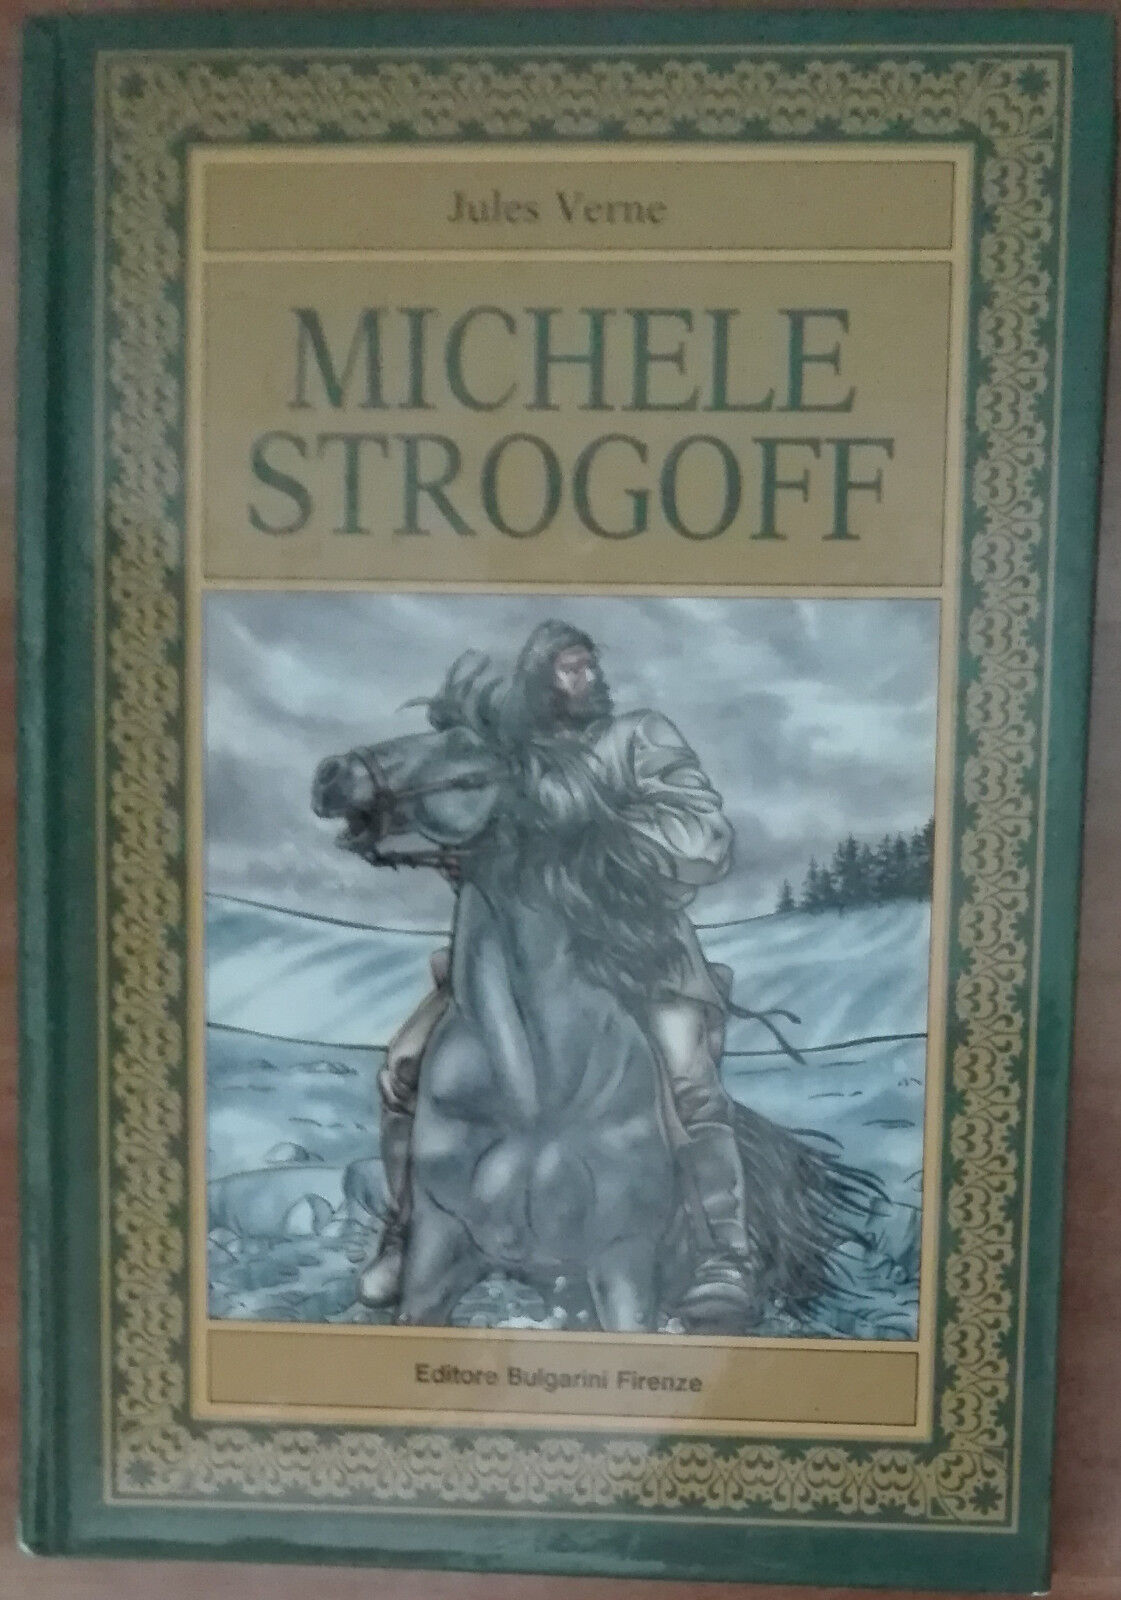 Michele Strogoff - Jules Verne - Bulgarini,1989 - A